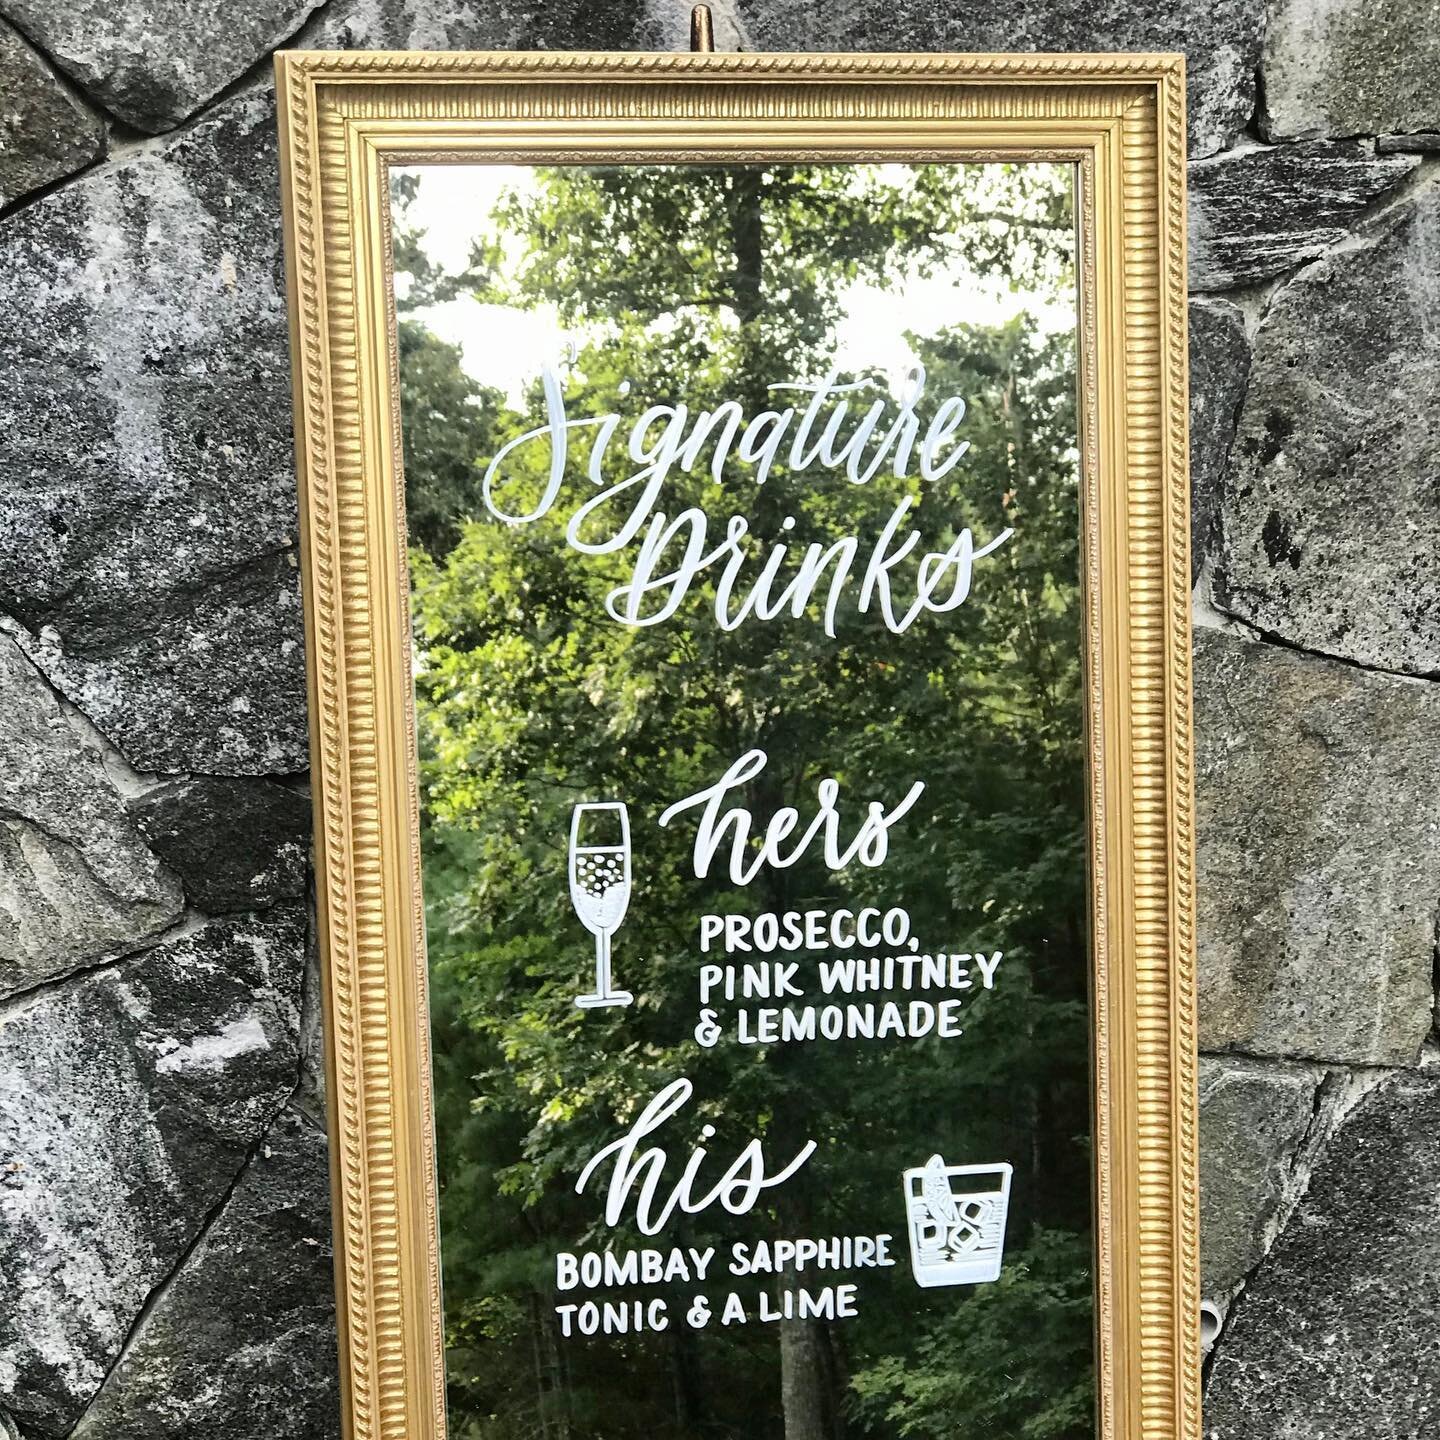 A signature drink sign next to the bar is always a good idea ✨
.
.
🪞 Gold Framed Mirror from my Rental Collection 
.
.
.
#weddingsignage #weddingsign #mawedding #northshorema #handmadesigns #bostonweddings #bostonweddingvendor #handlettered #modernc